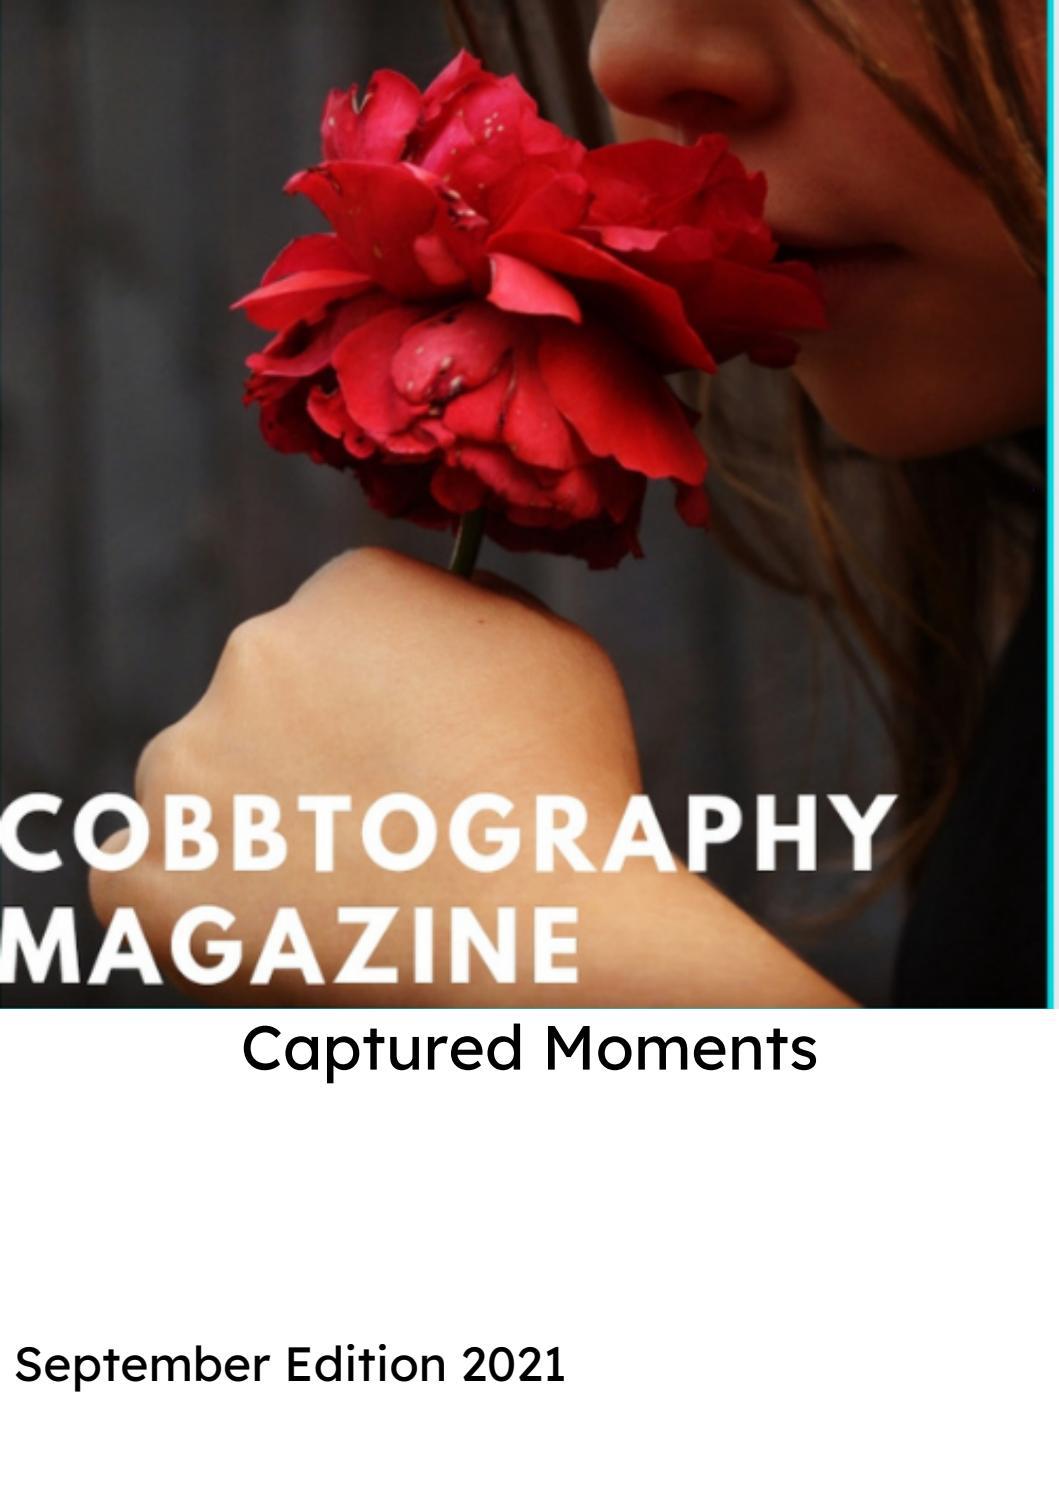 Cobbtography Magazine September Edition 2021